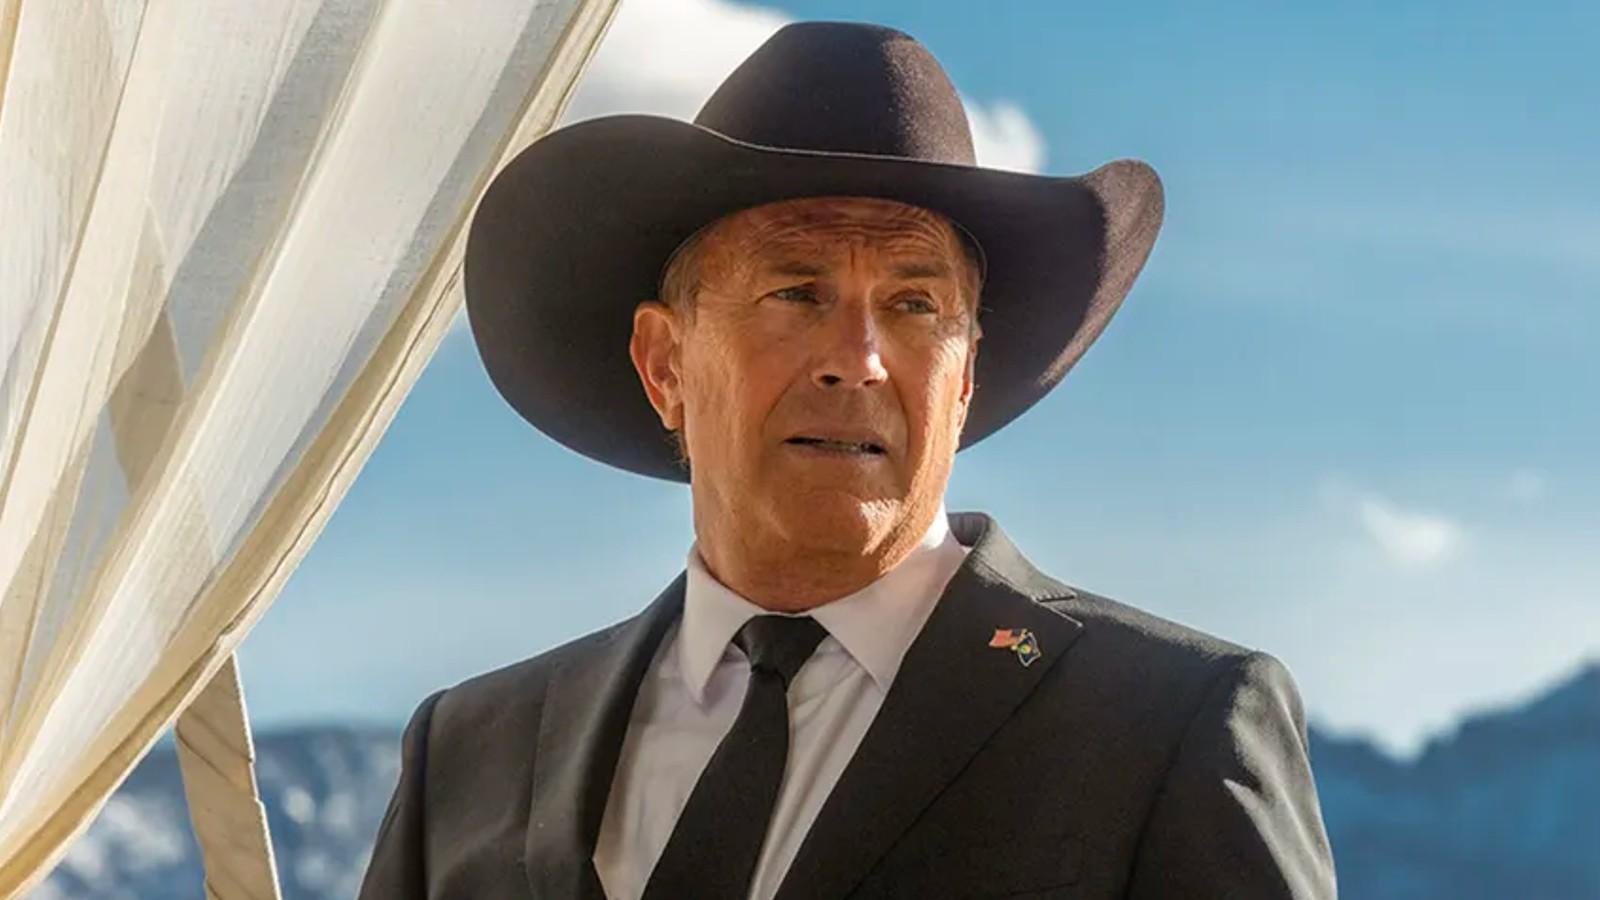 Kevin Costner in Yellowstone Season 5